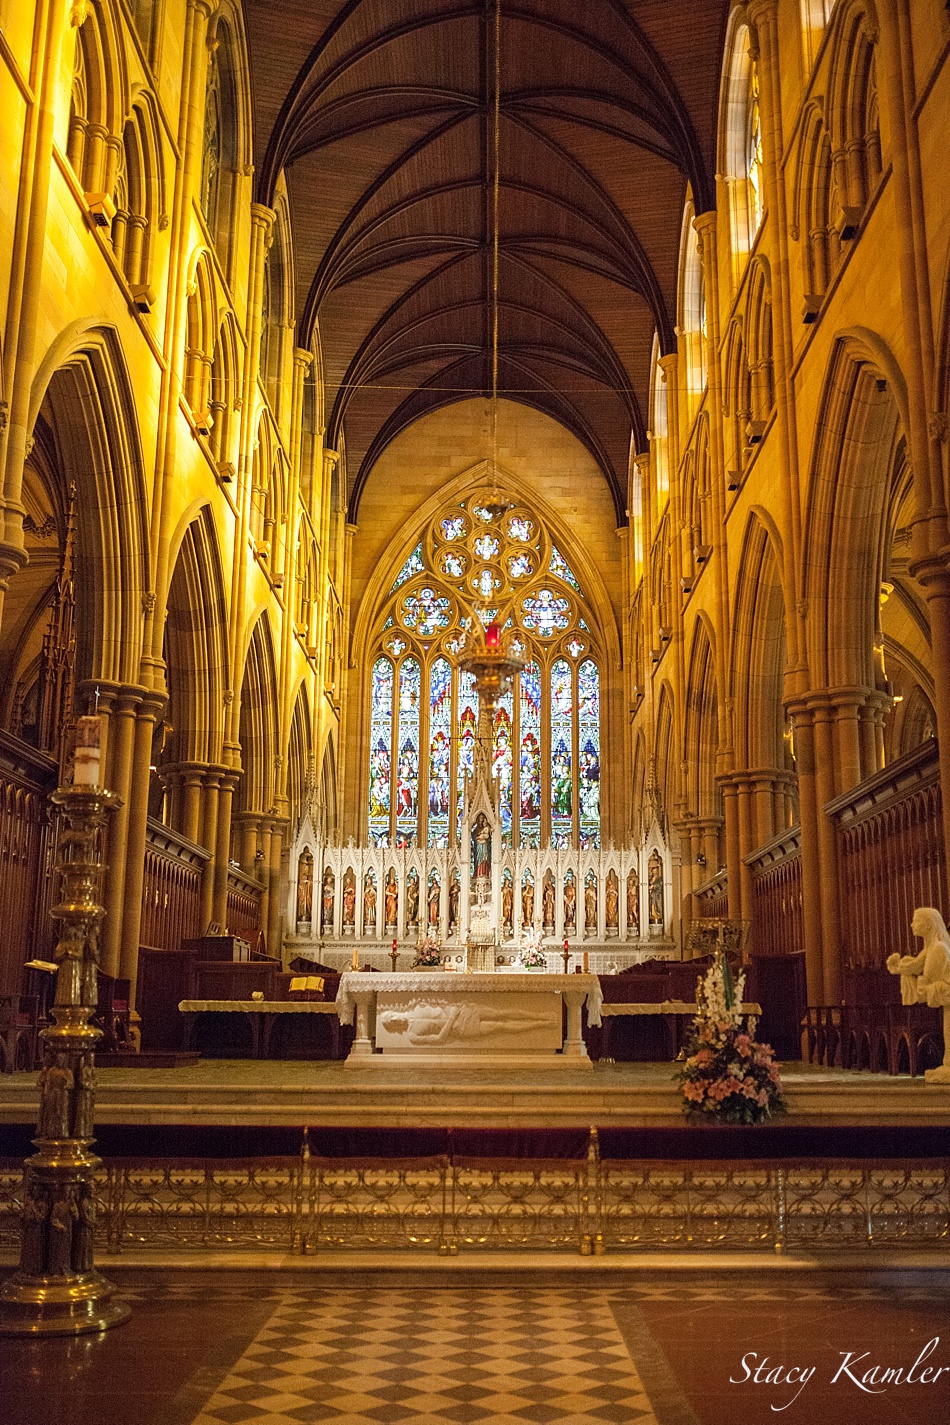 Inside St. Mary's Cathedral Church, Sydney Australia